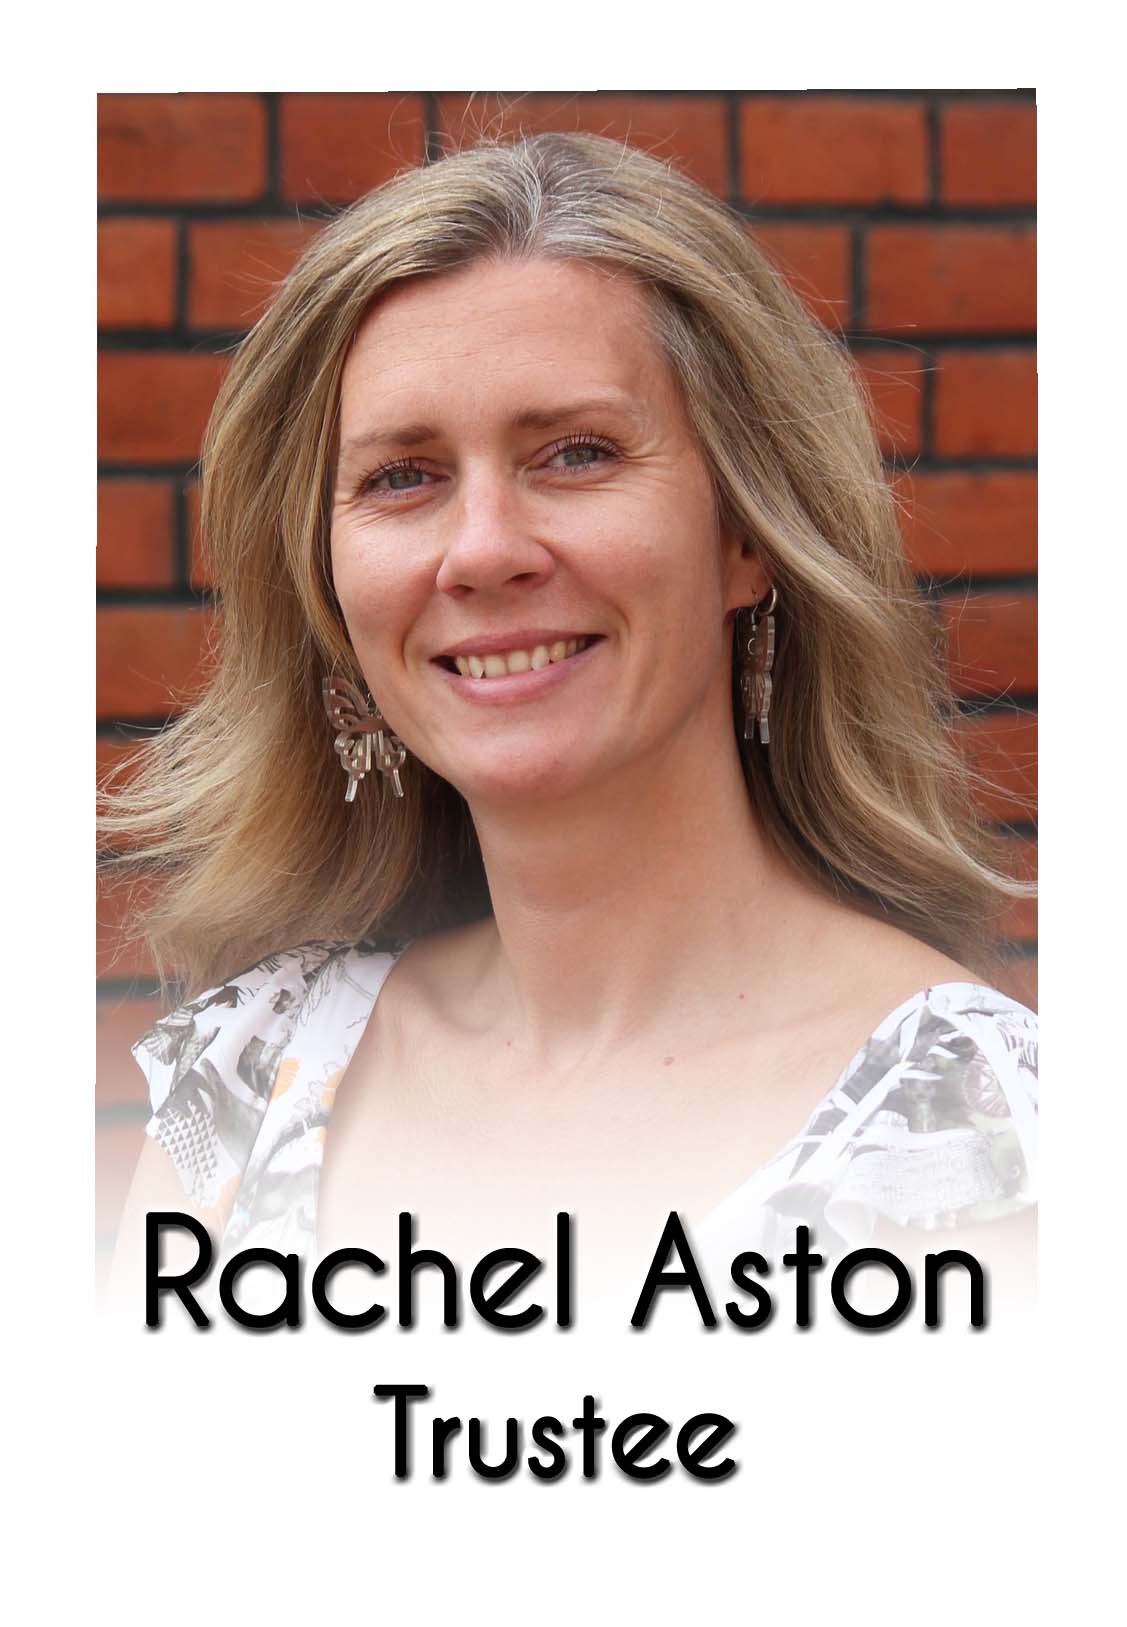 Rachel Aston labelled